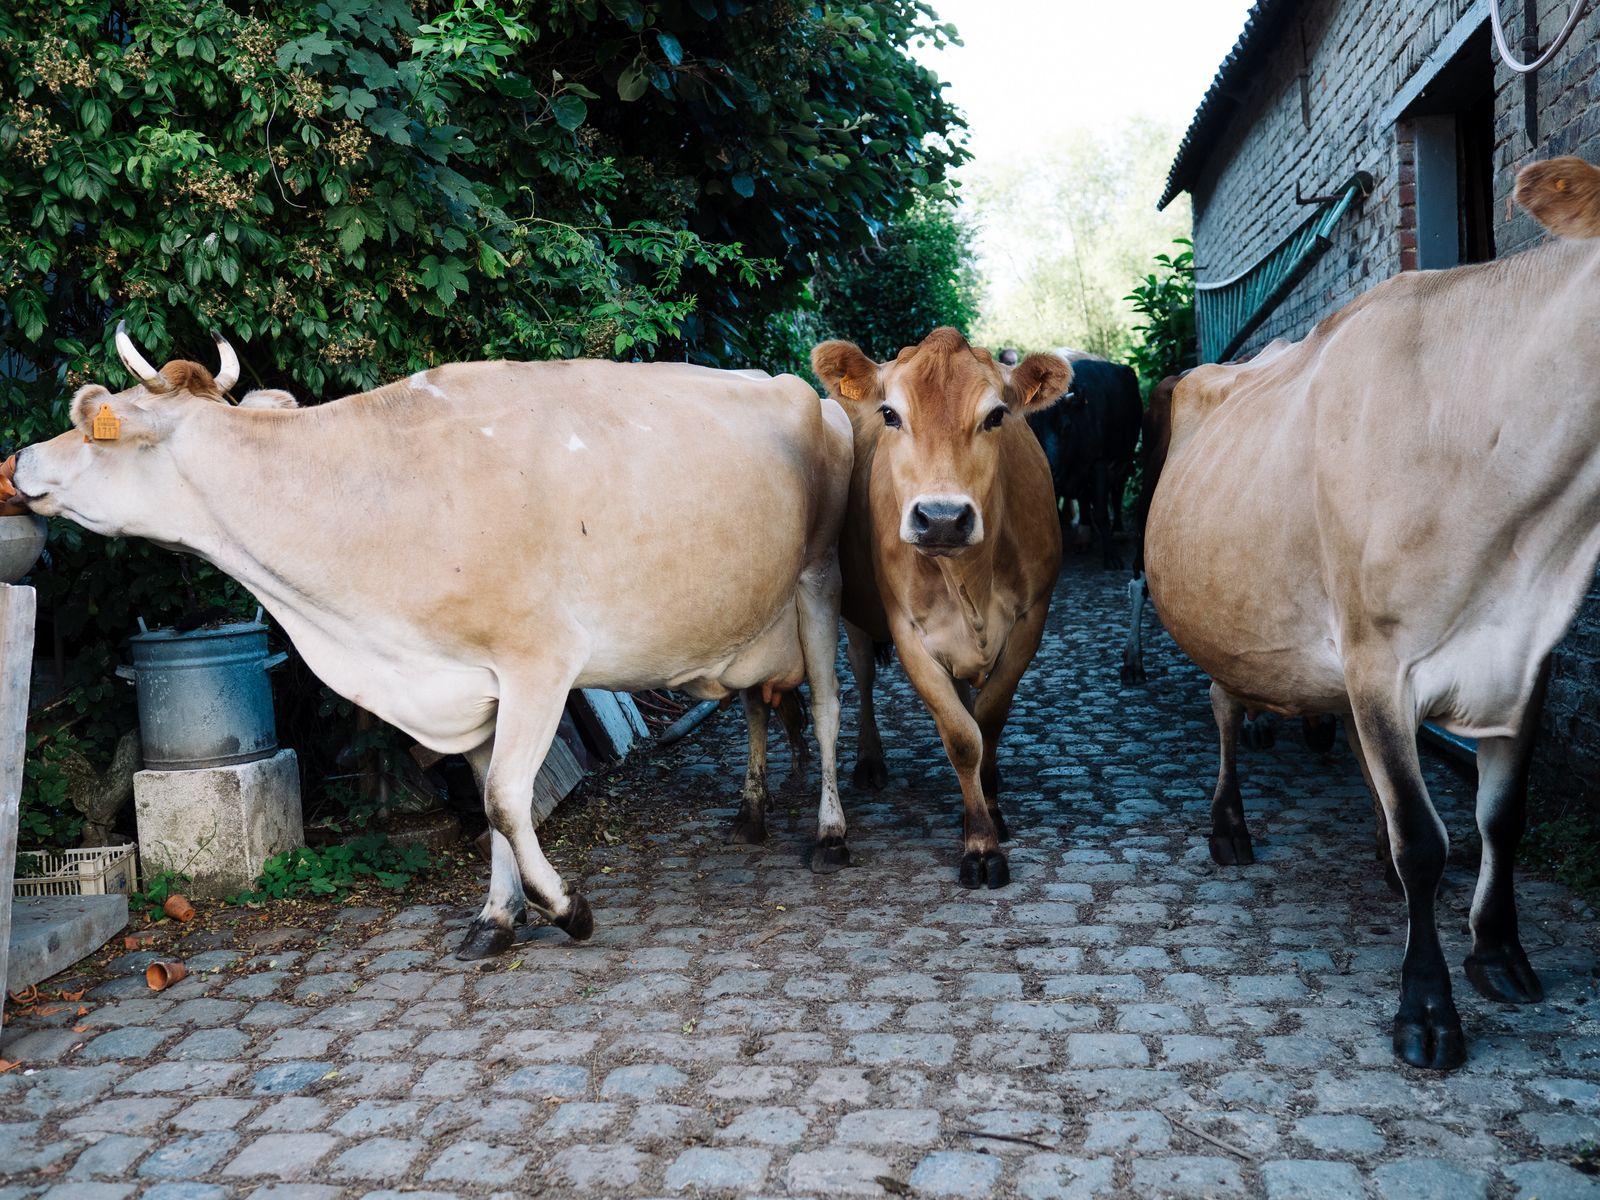 The cows of Dubbeldoel